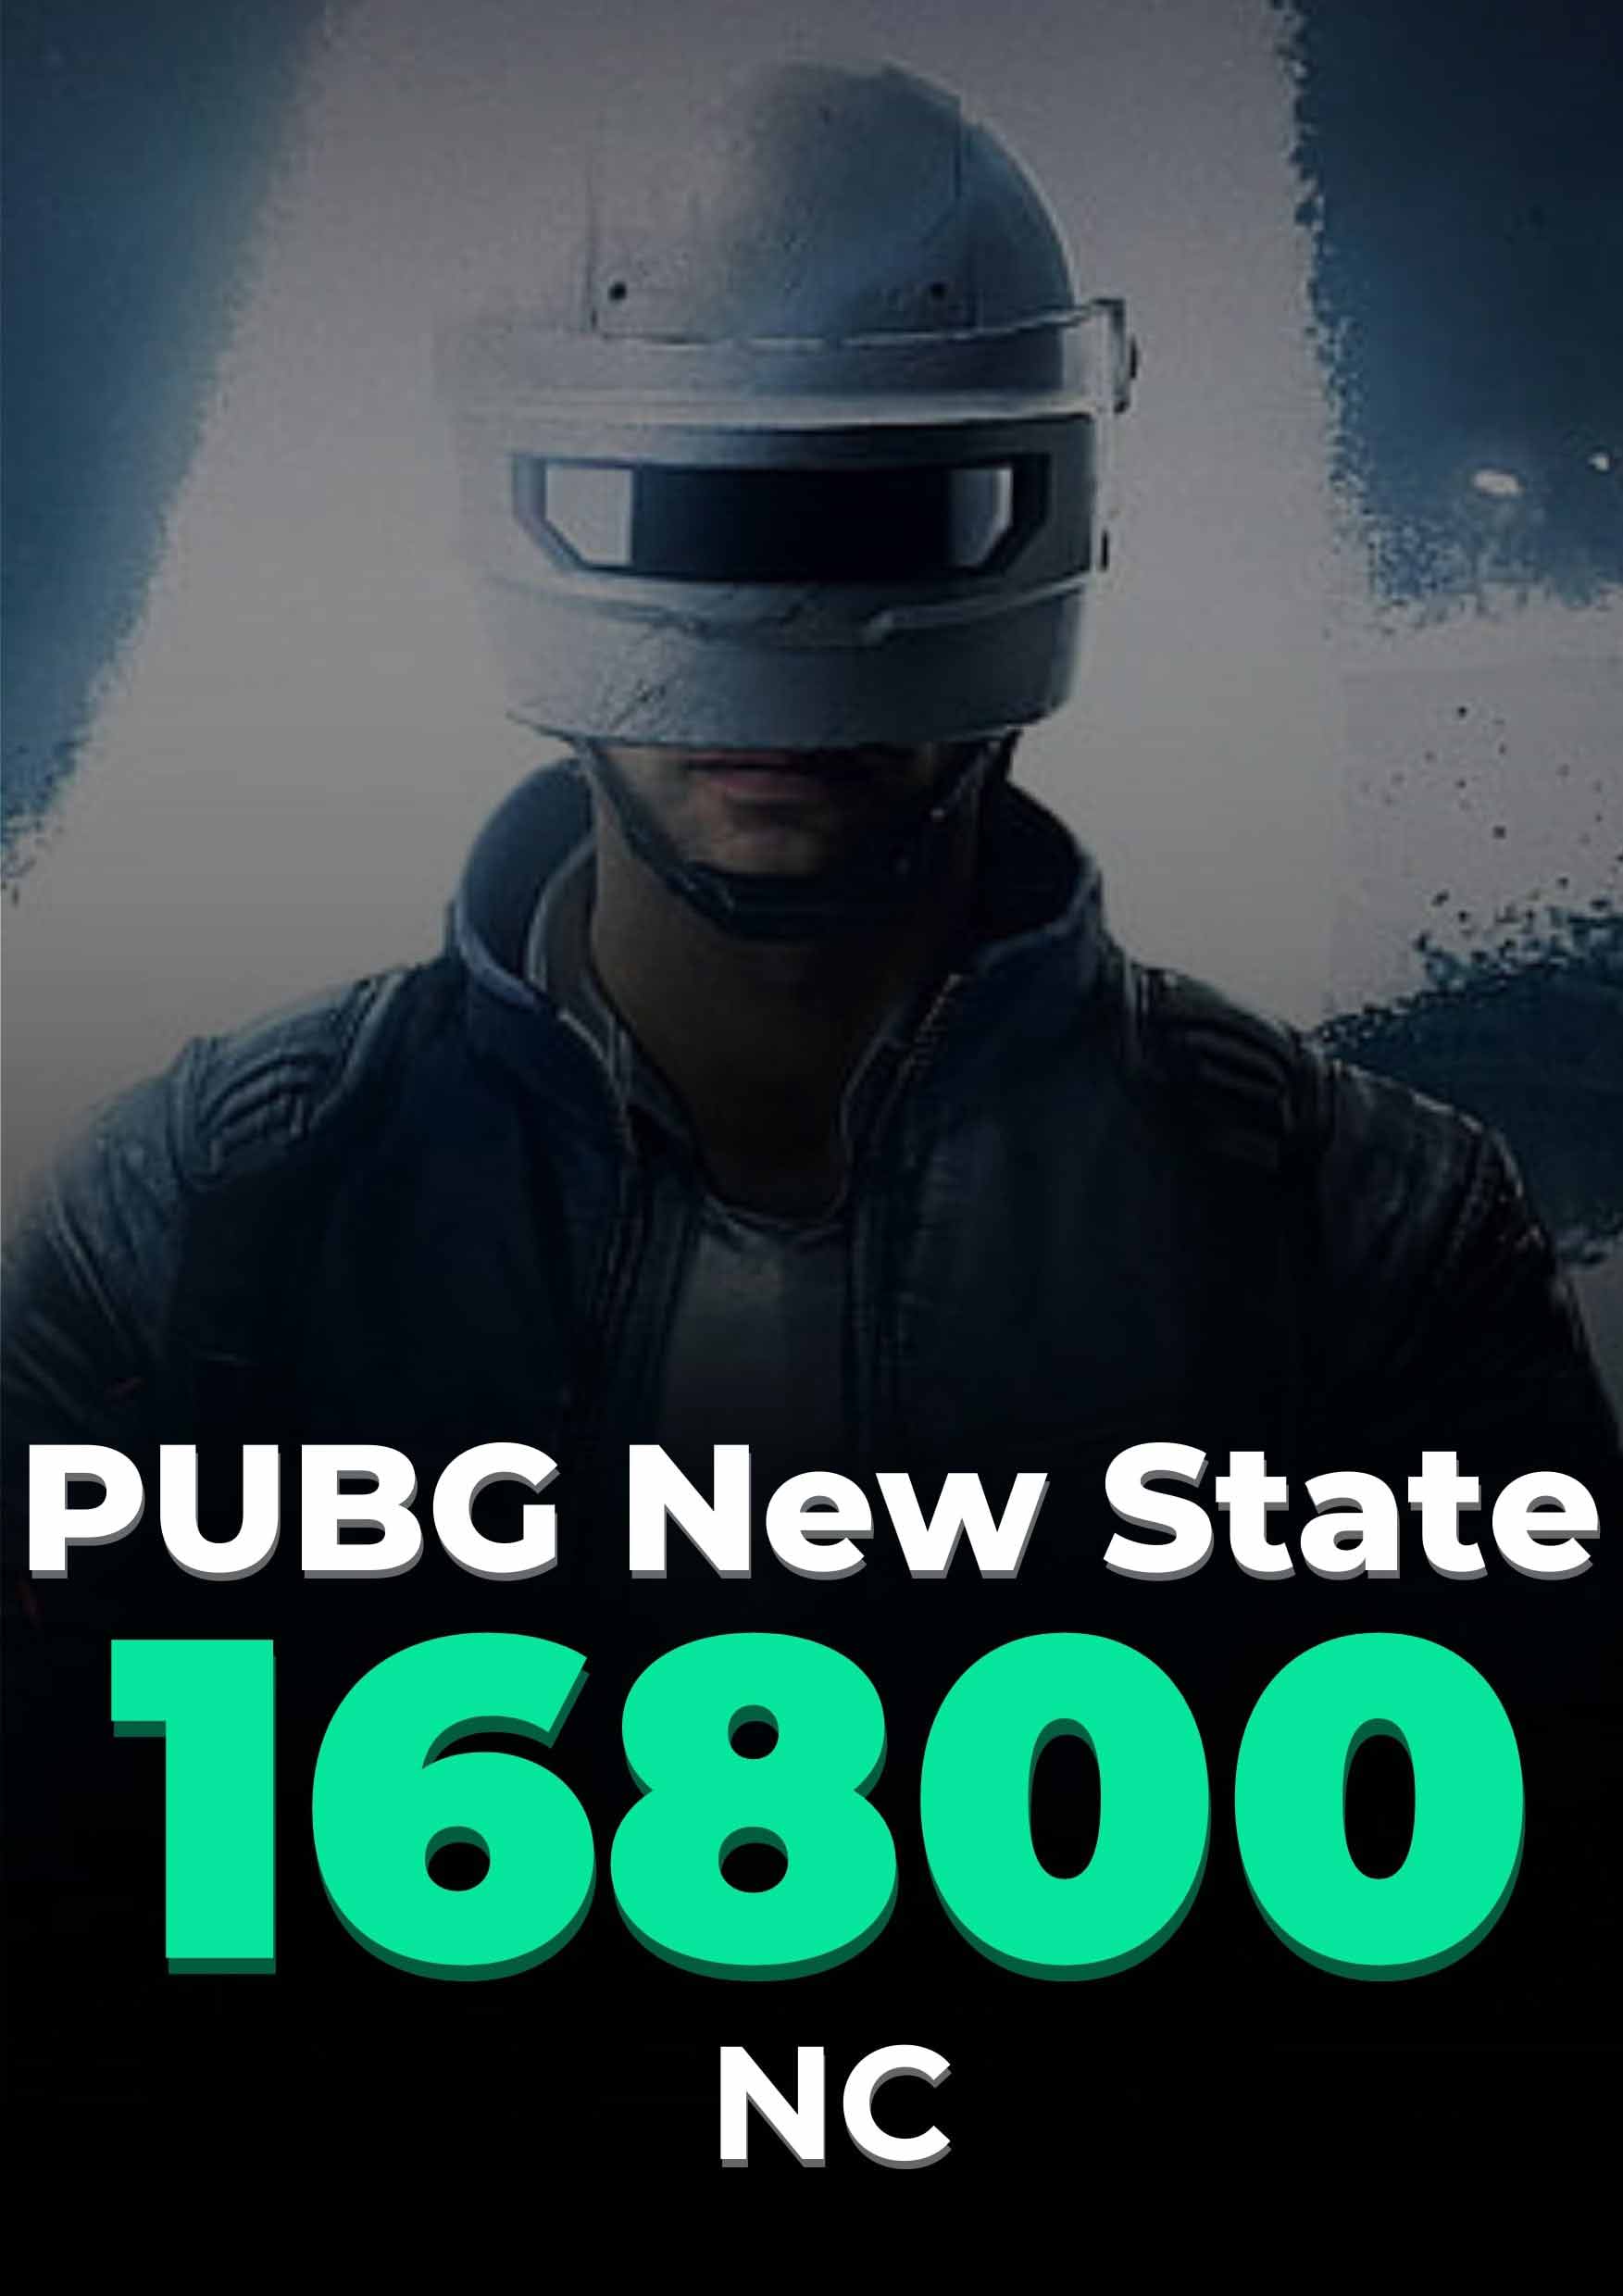 Pubg New State 15000 + 1800 NC